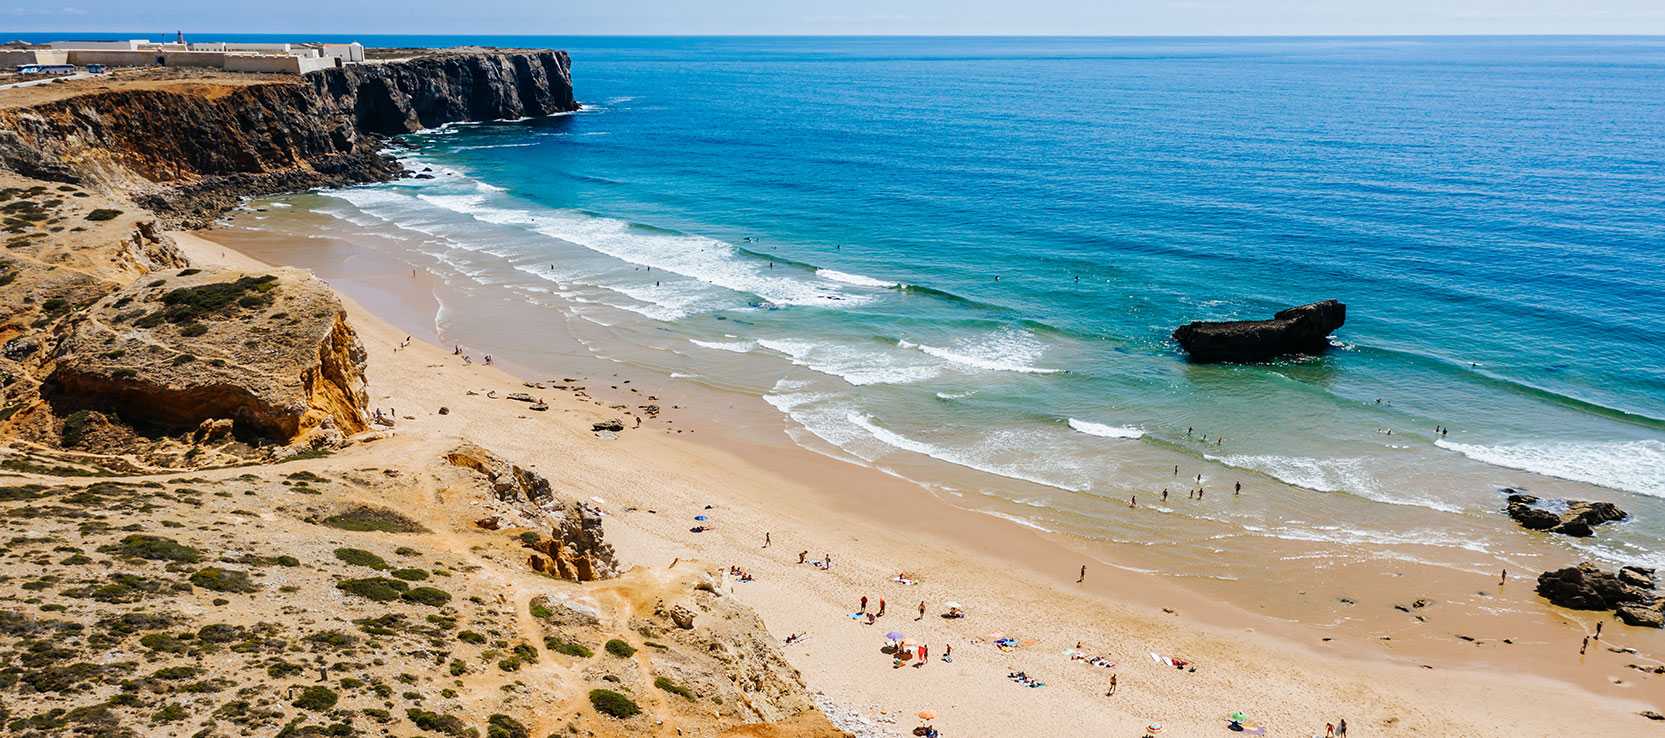 Praia do Tonel, Sagres, Portugal - image Beachcam.pt // Kiterr.com